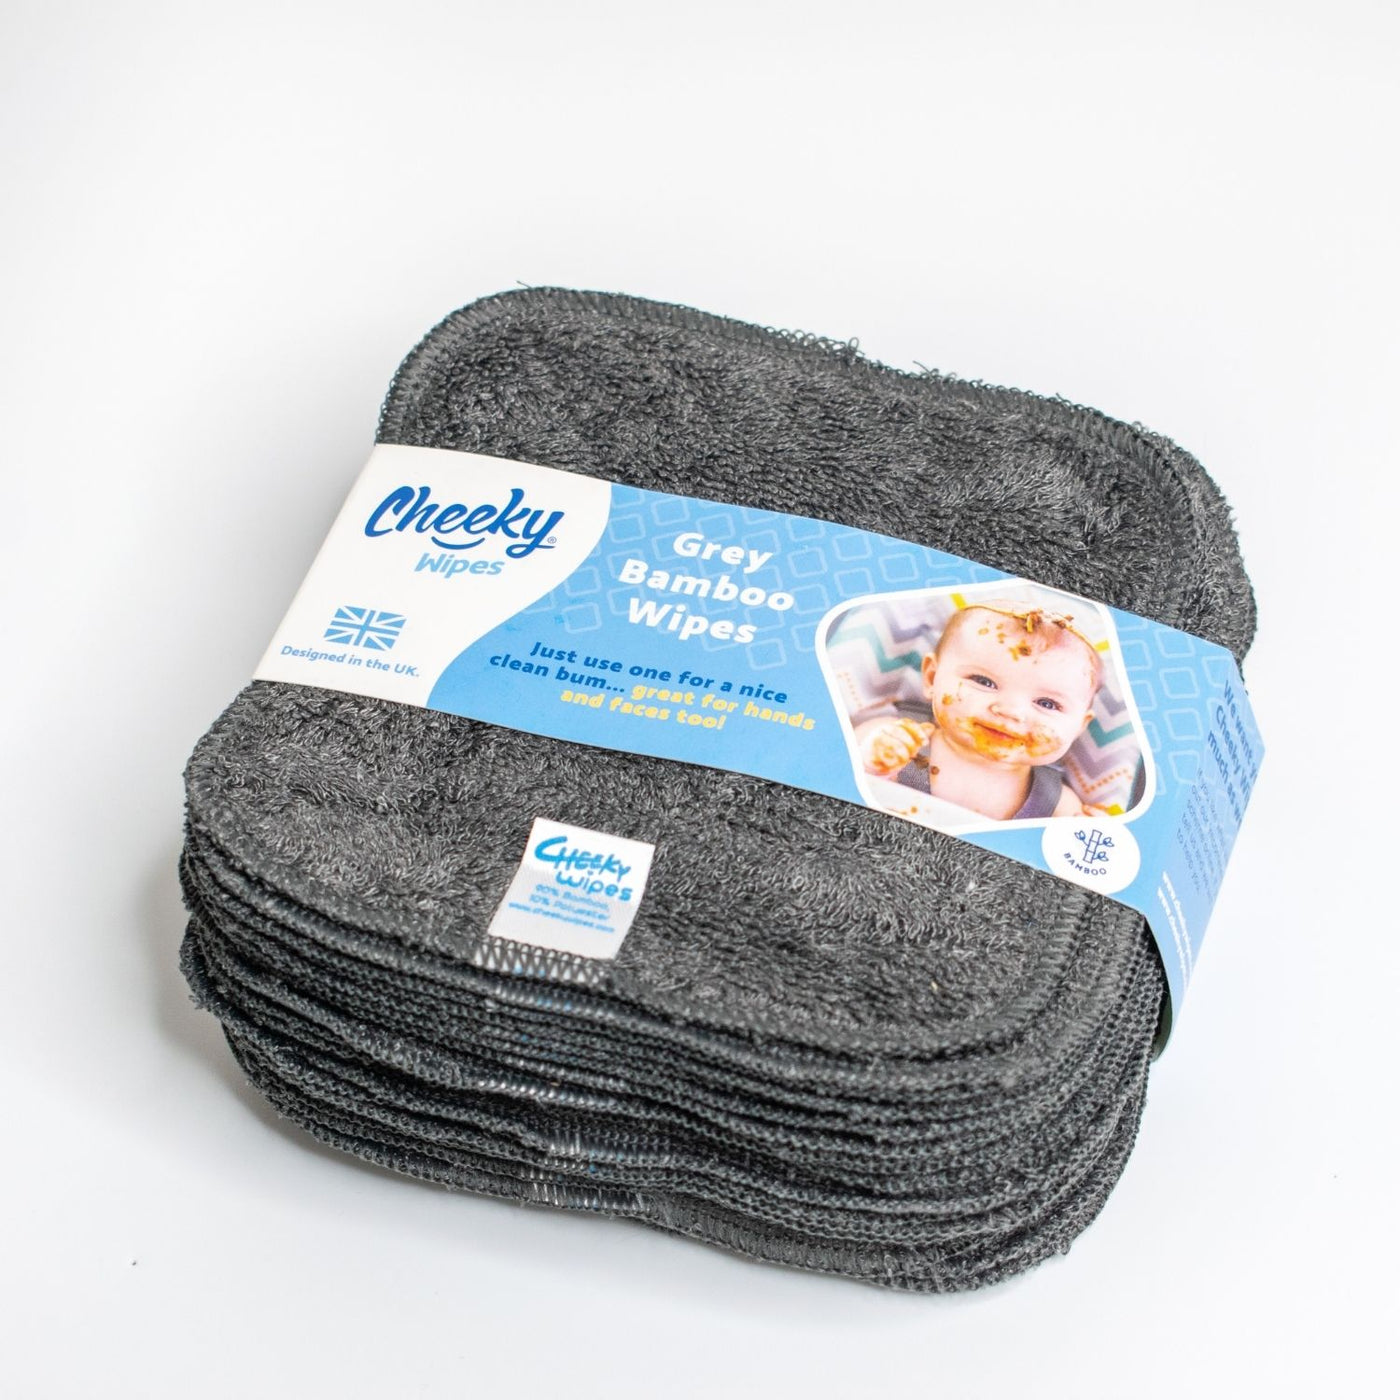 Cheeky Wipes - Mini Reusable Wipes Kit